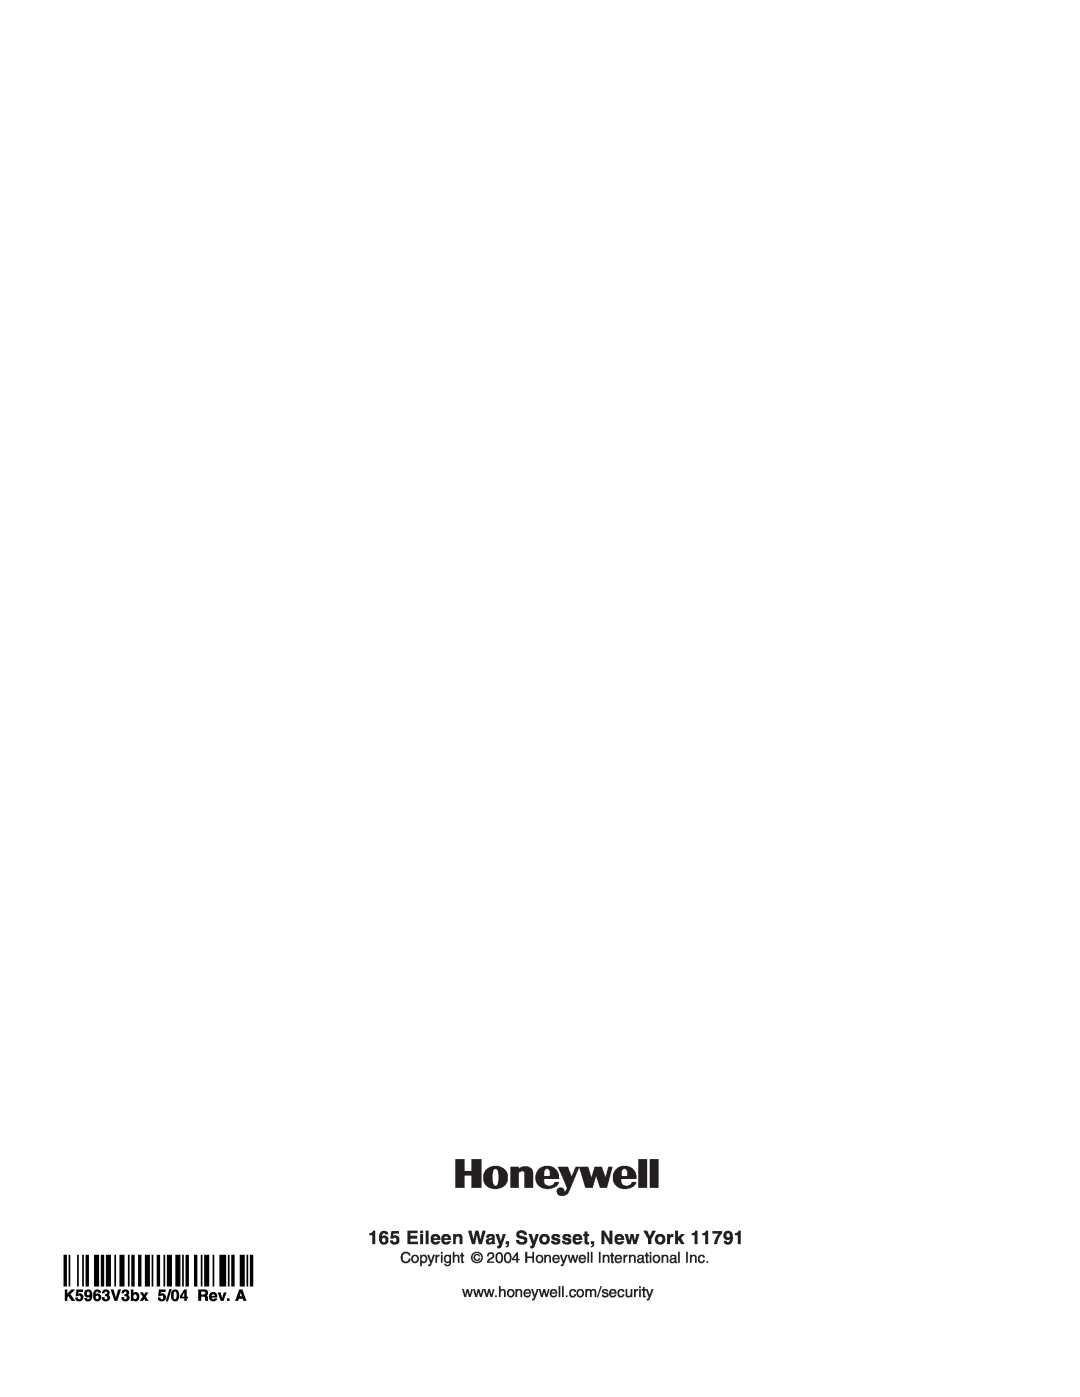 Honeywell LYNXR Series, LYNXR-EN setup guide ‡K5963V3oŠ, Eileen Way, Syosset, New York, K5963V3bx 5/04 Rev. A 